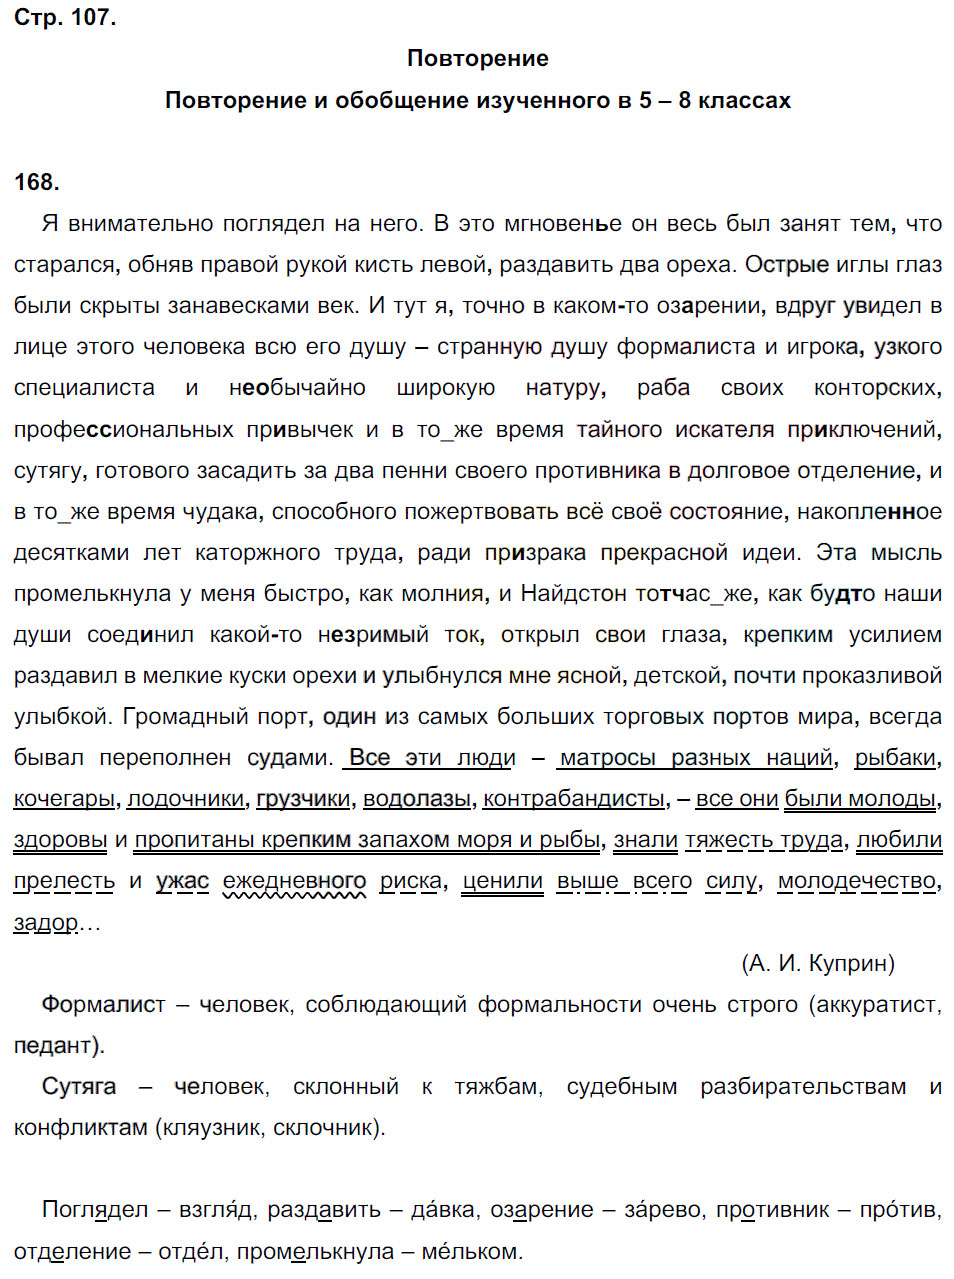 гдз 8 класс рабочая тетрадь страница 107 русский язык Кулаева